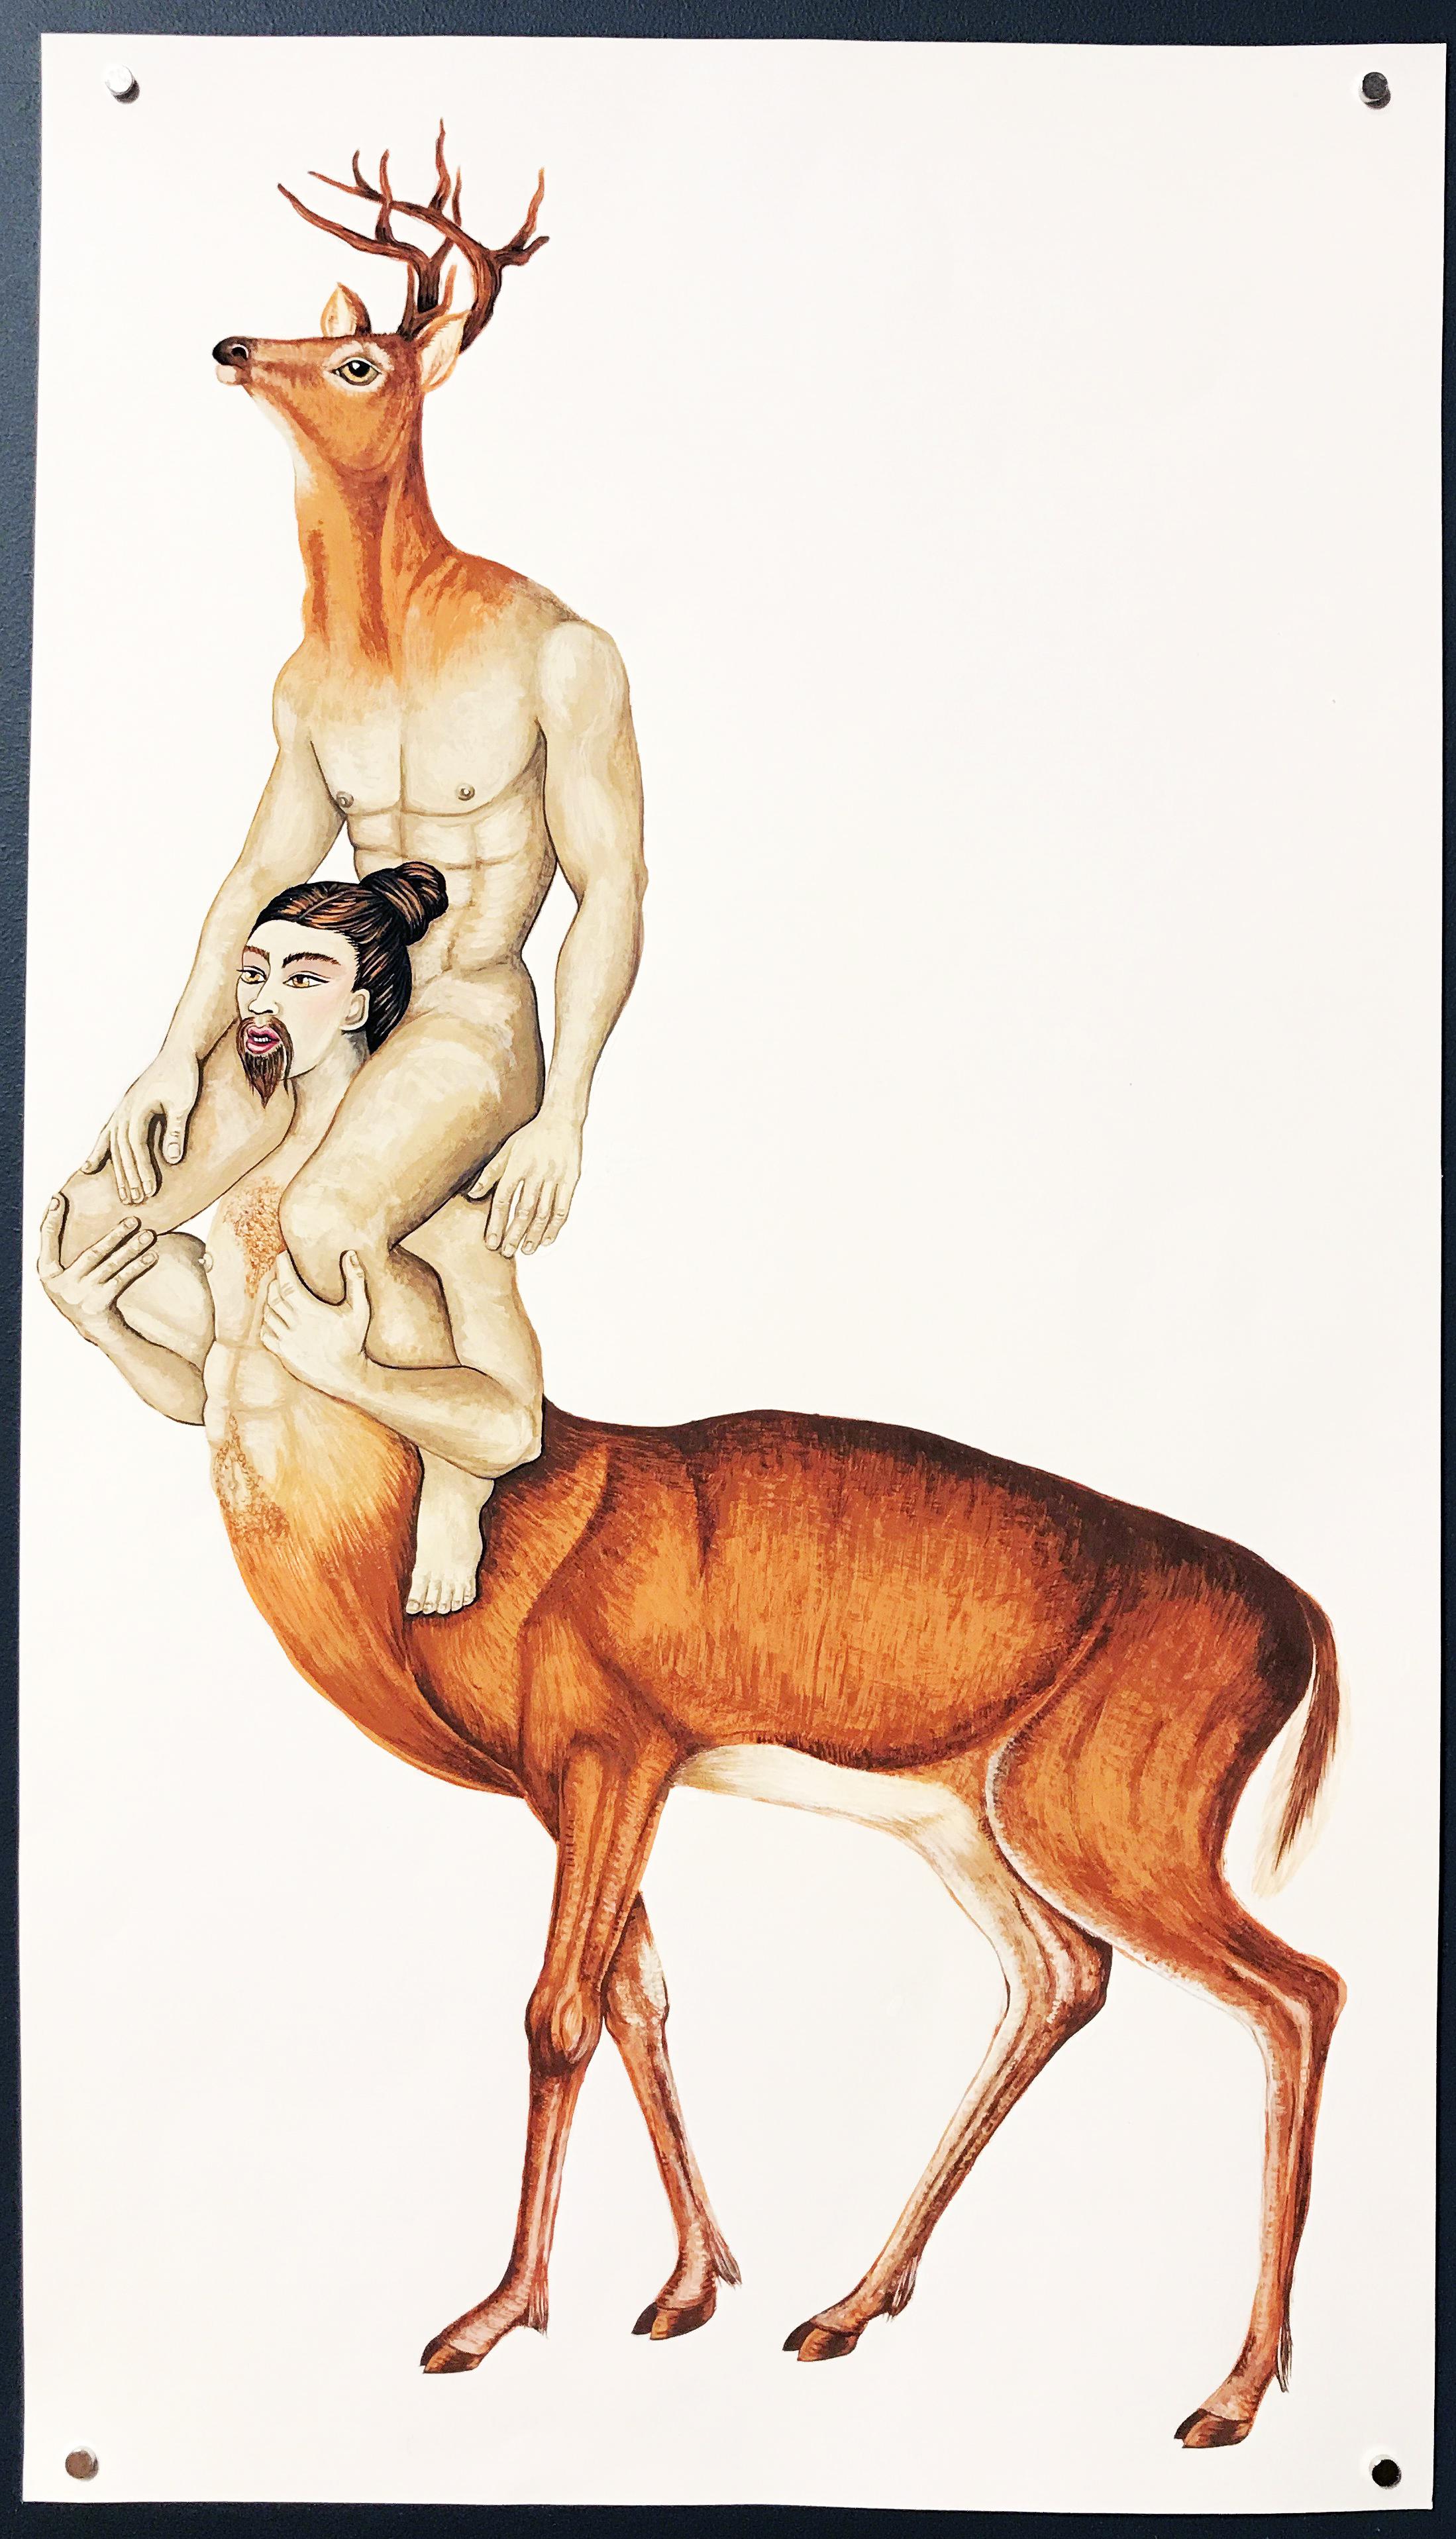 Heather Ujiie
Erotic Tree of Life- Two Half-Deer Figures, 2014
Watercolor on paper
22 x 11 in